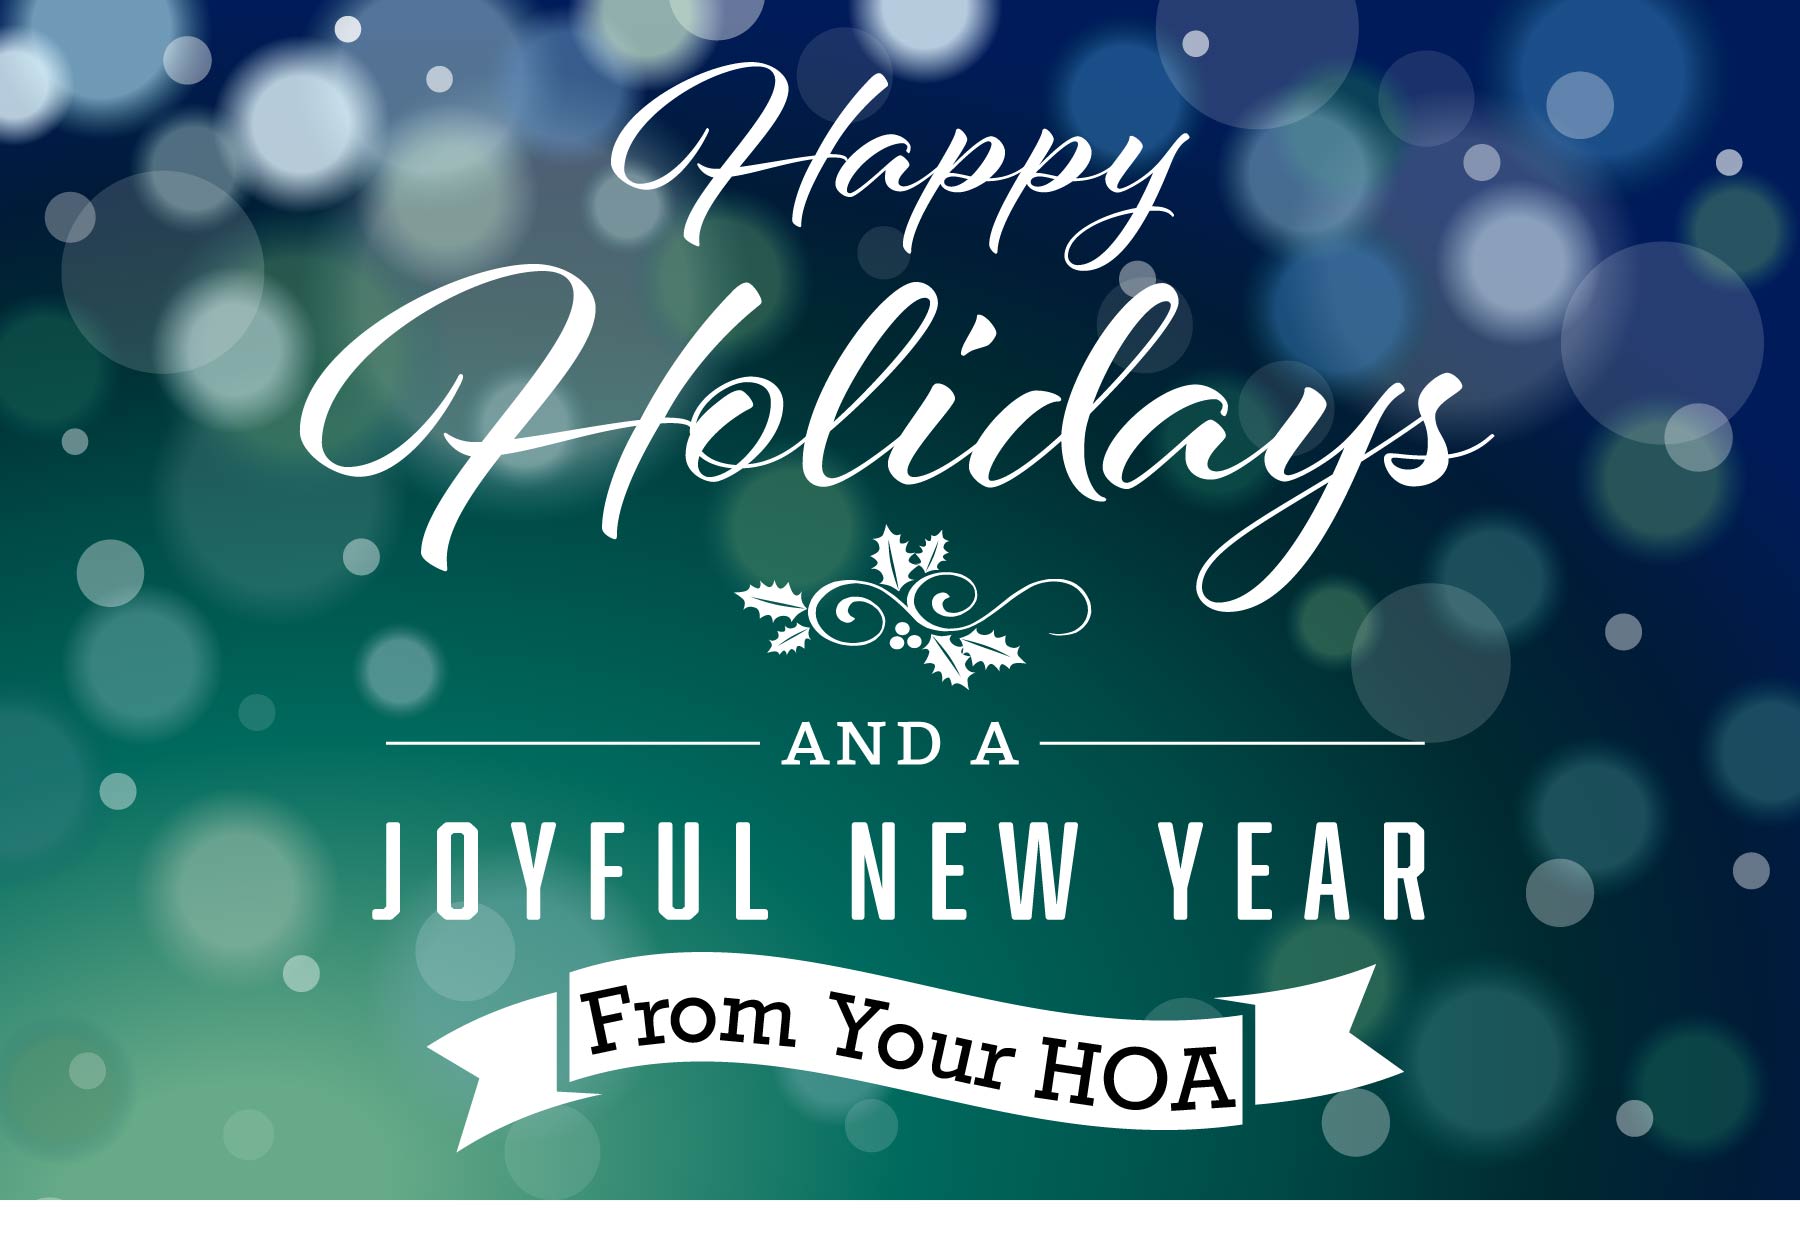 https://myneighborhoodnews.com/uploads/images/Holidays/Christmas/Happy_Holidays_from_Your_HOA_Generic_.jpg